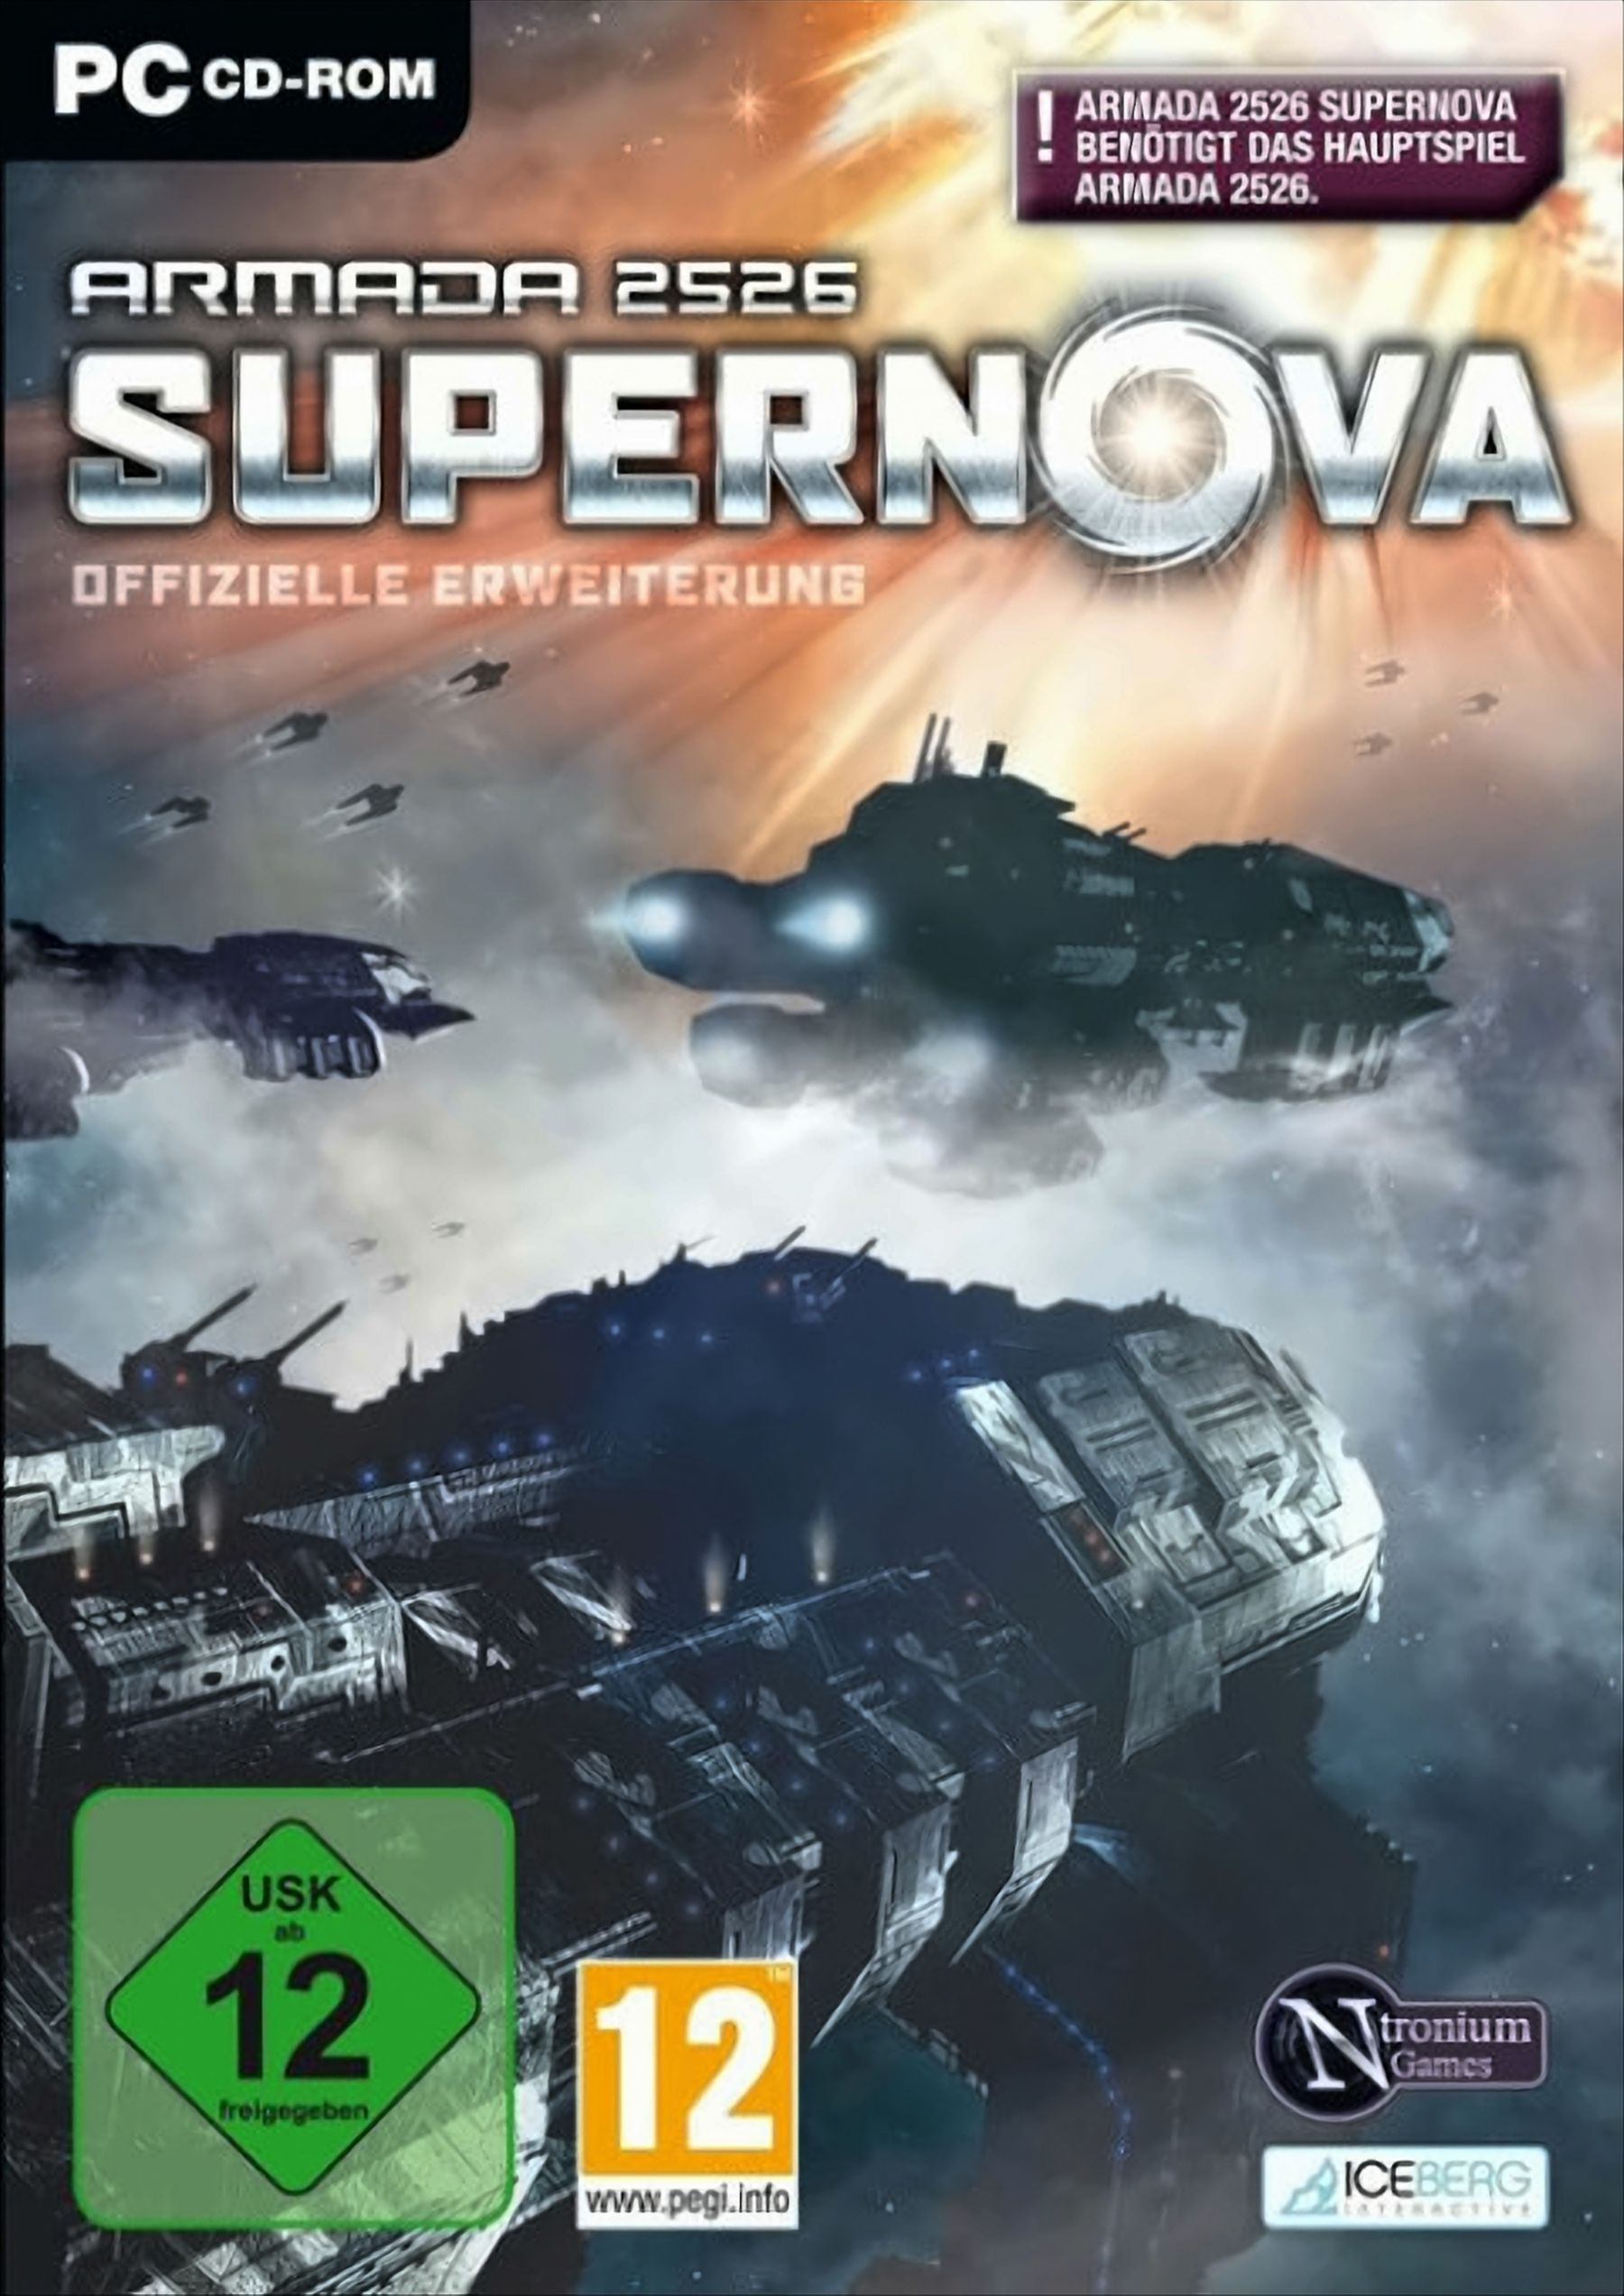 [PC] 2526: Supernova - Armada